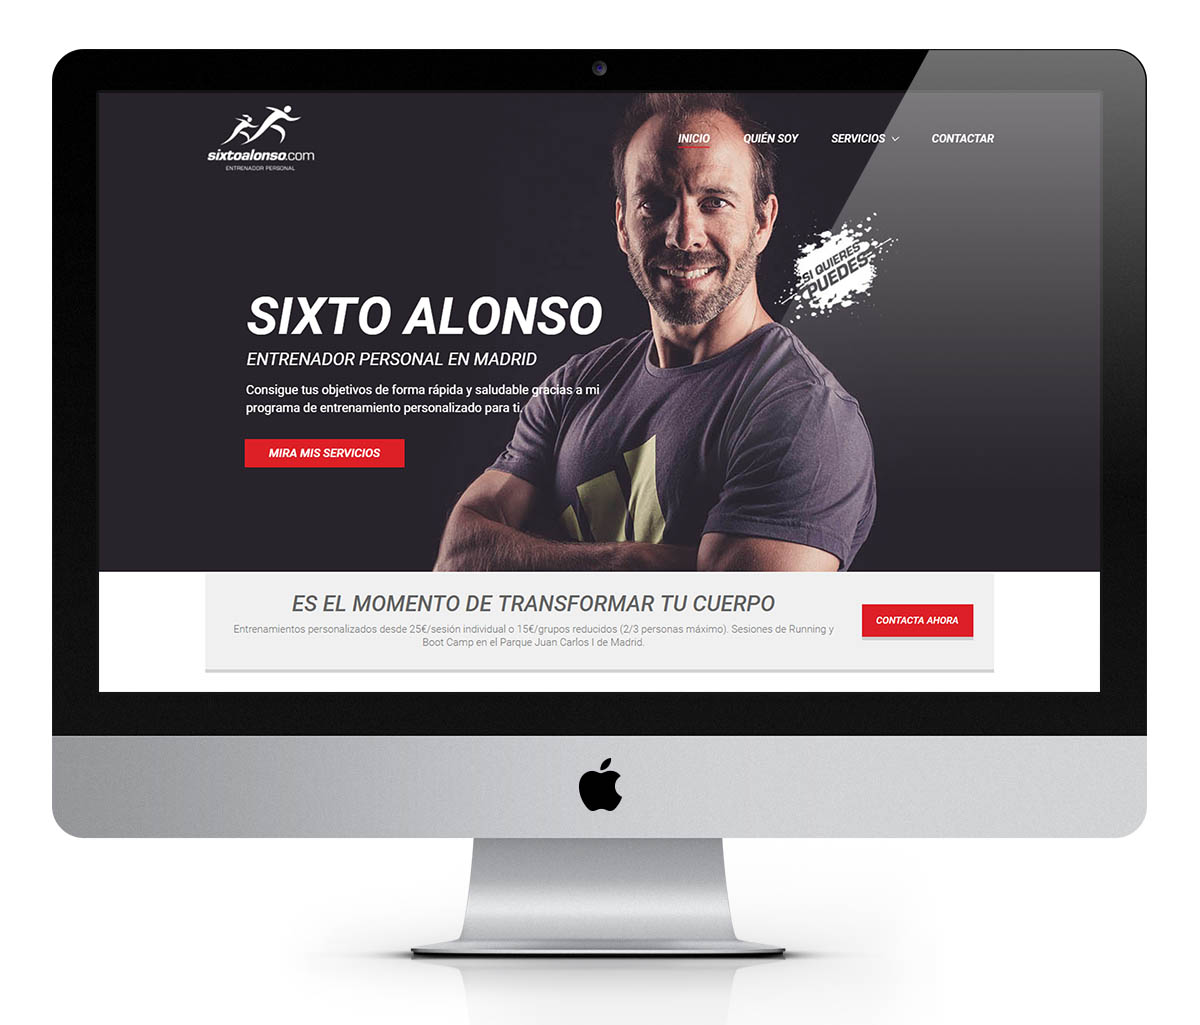 Sixto Alonso - Entrenador personal Madrid